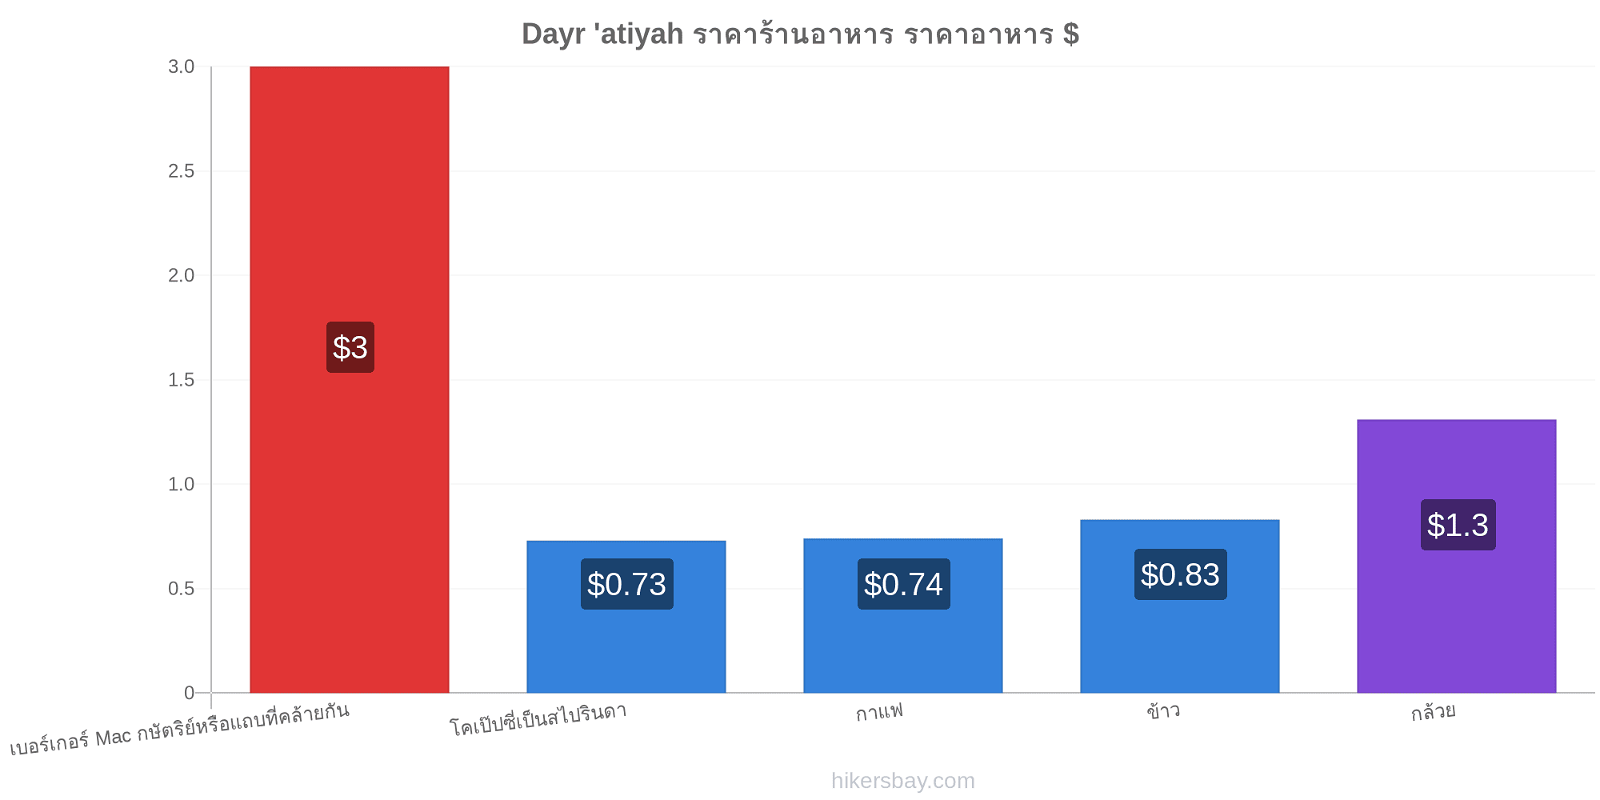 Dayr 'atiyah การเปลี่ยนแปลงราคา hikersbay.com